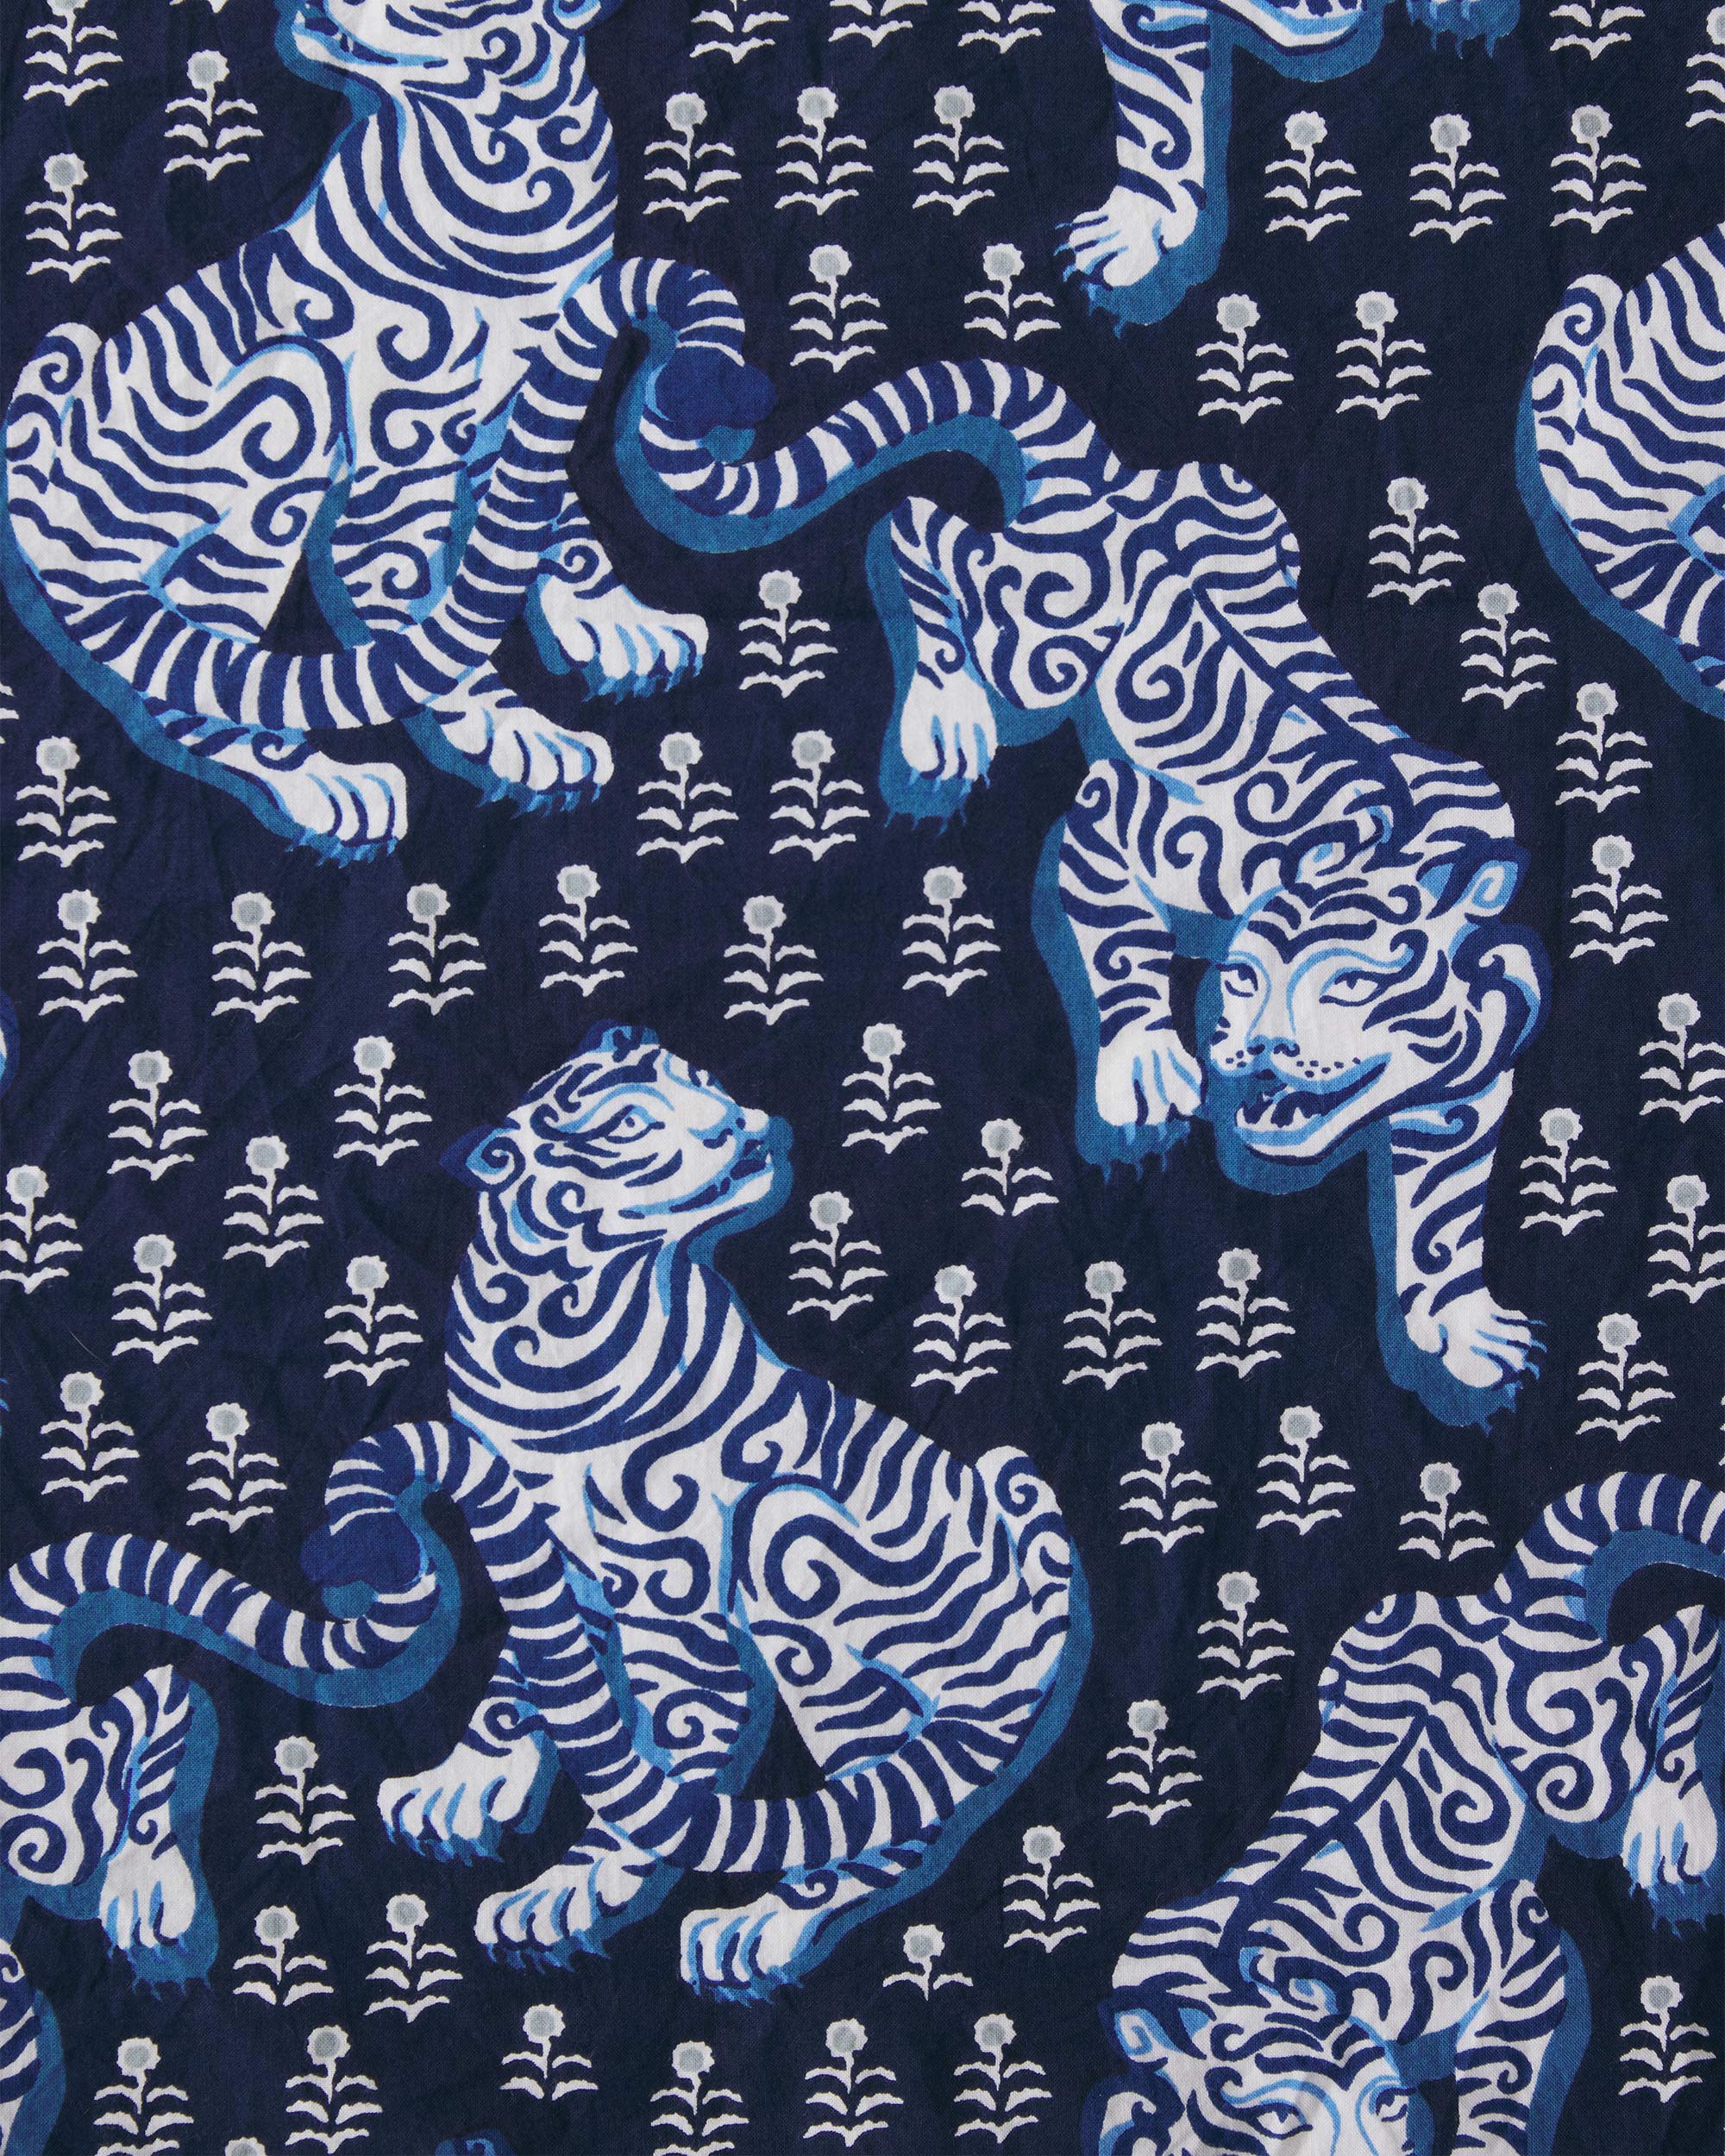 Tiger Queen - Sleep Shirt - Navy - Printfresh